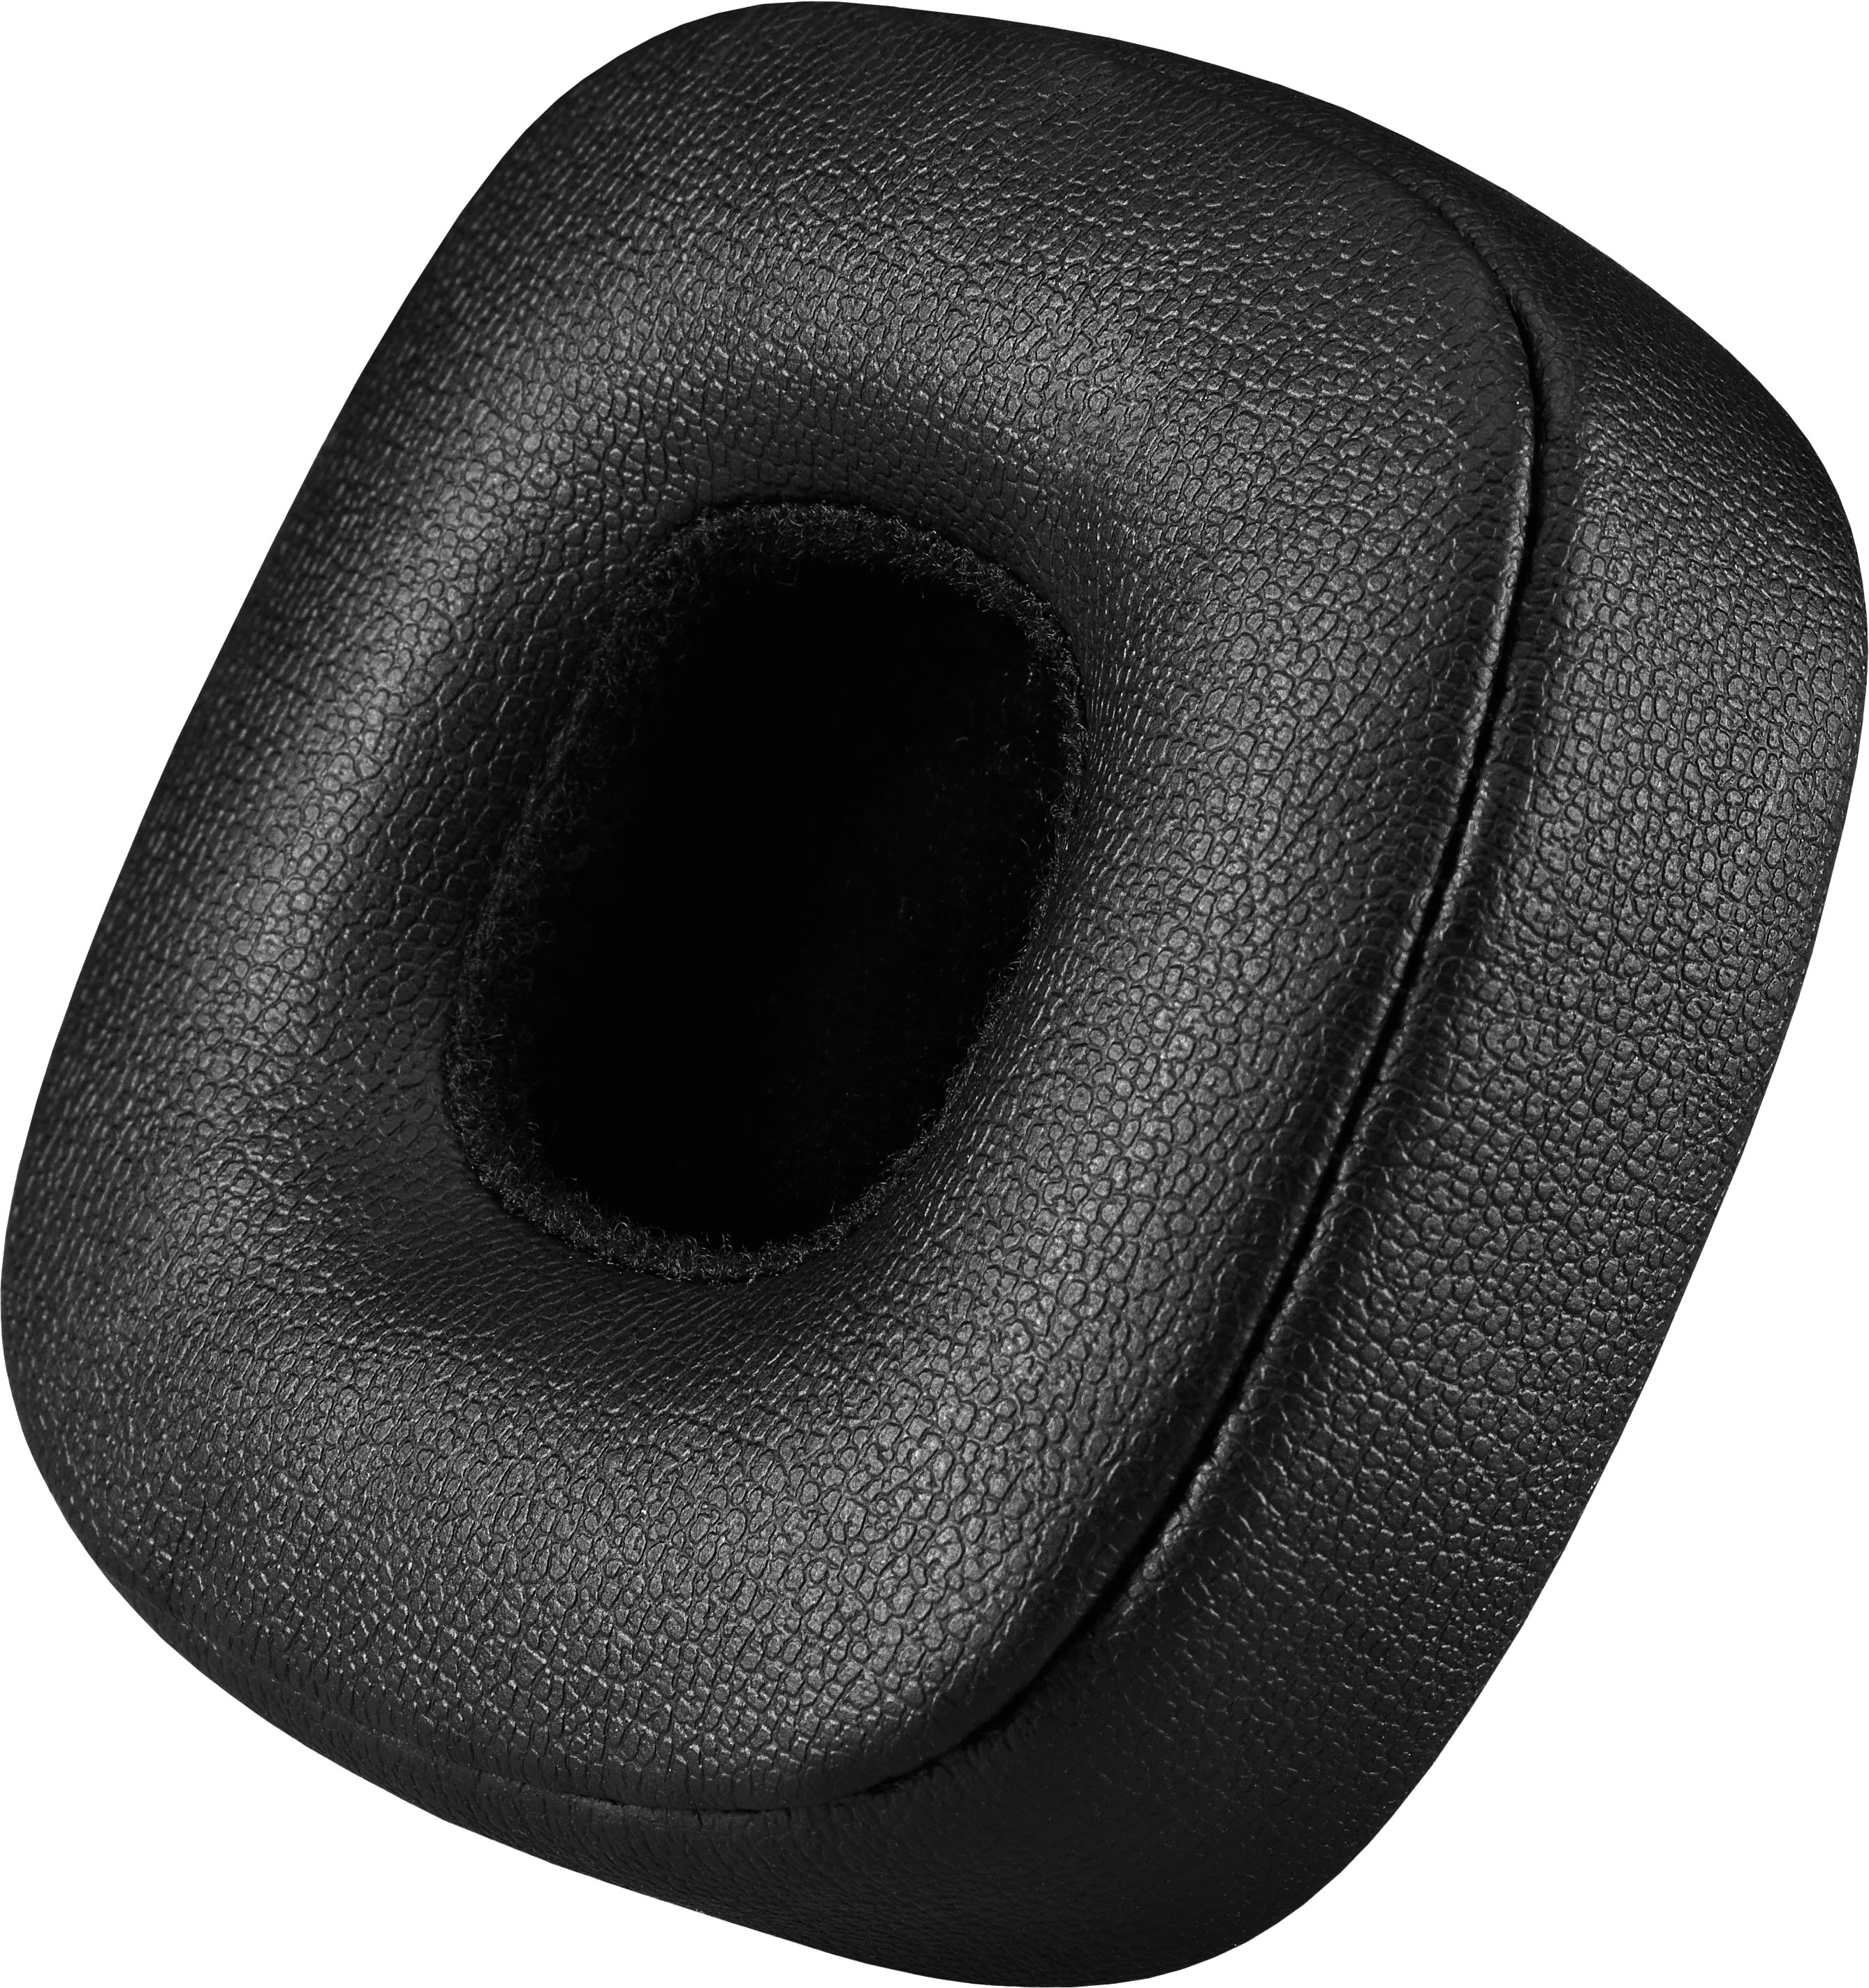 Wireless Headphones MARSHALL Major IV Bluetooth Black purchase: price,  installments - iSpace